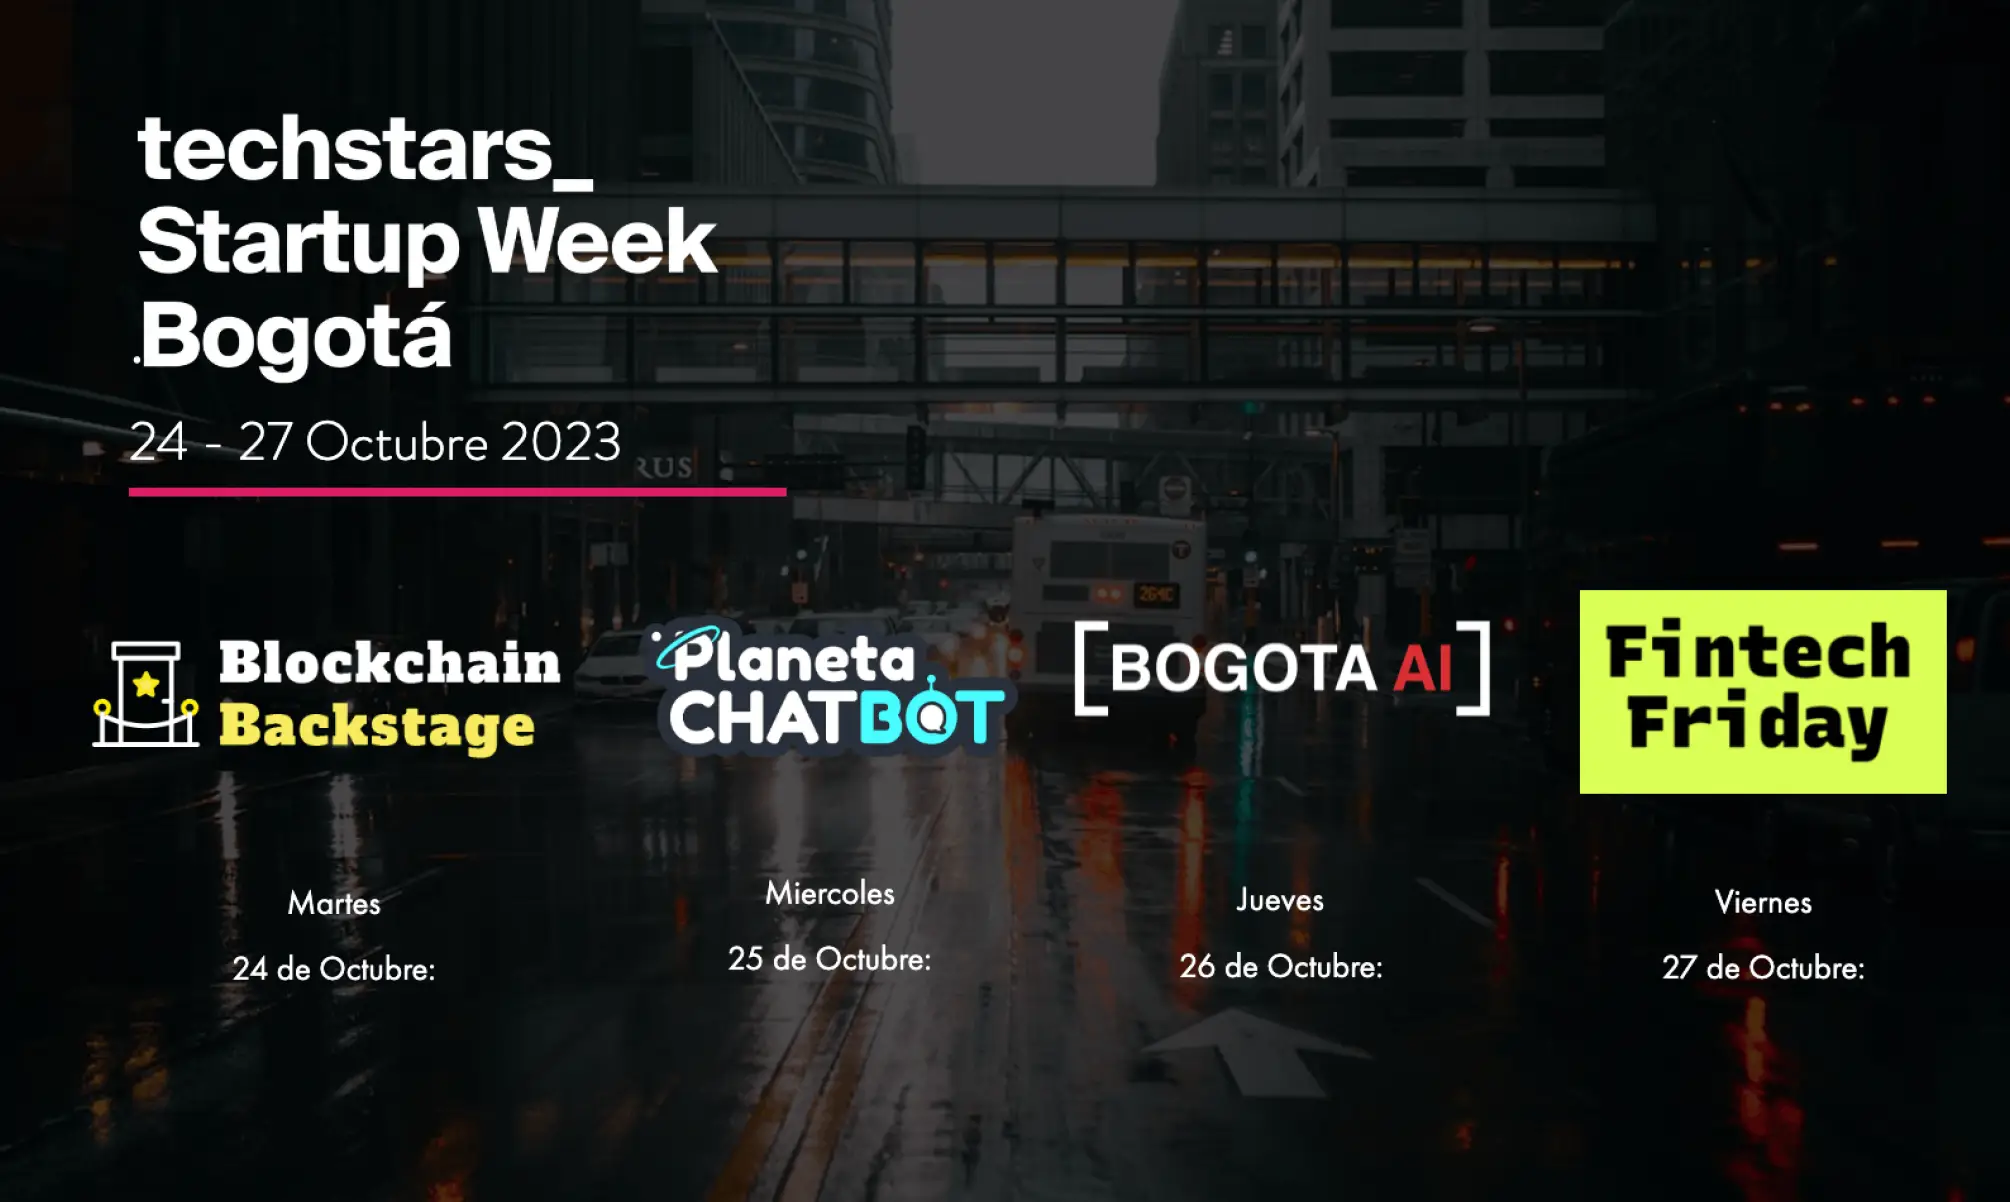 Programación del Techstars Startup Week en 2023